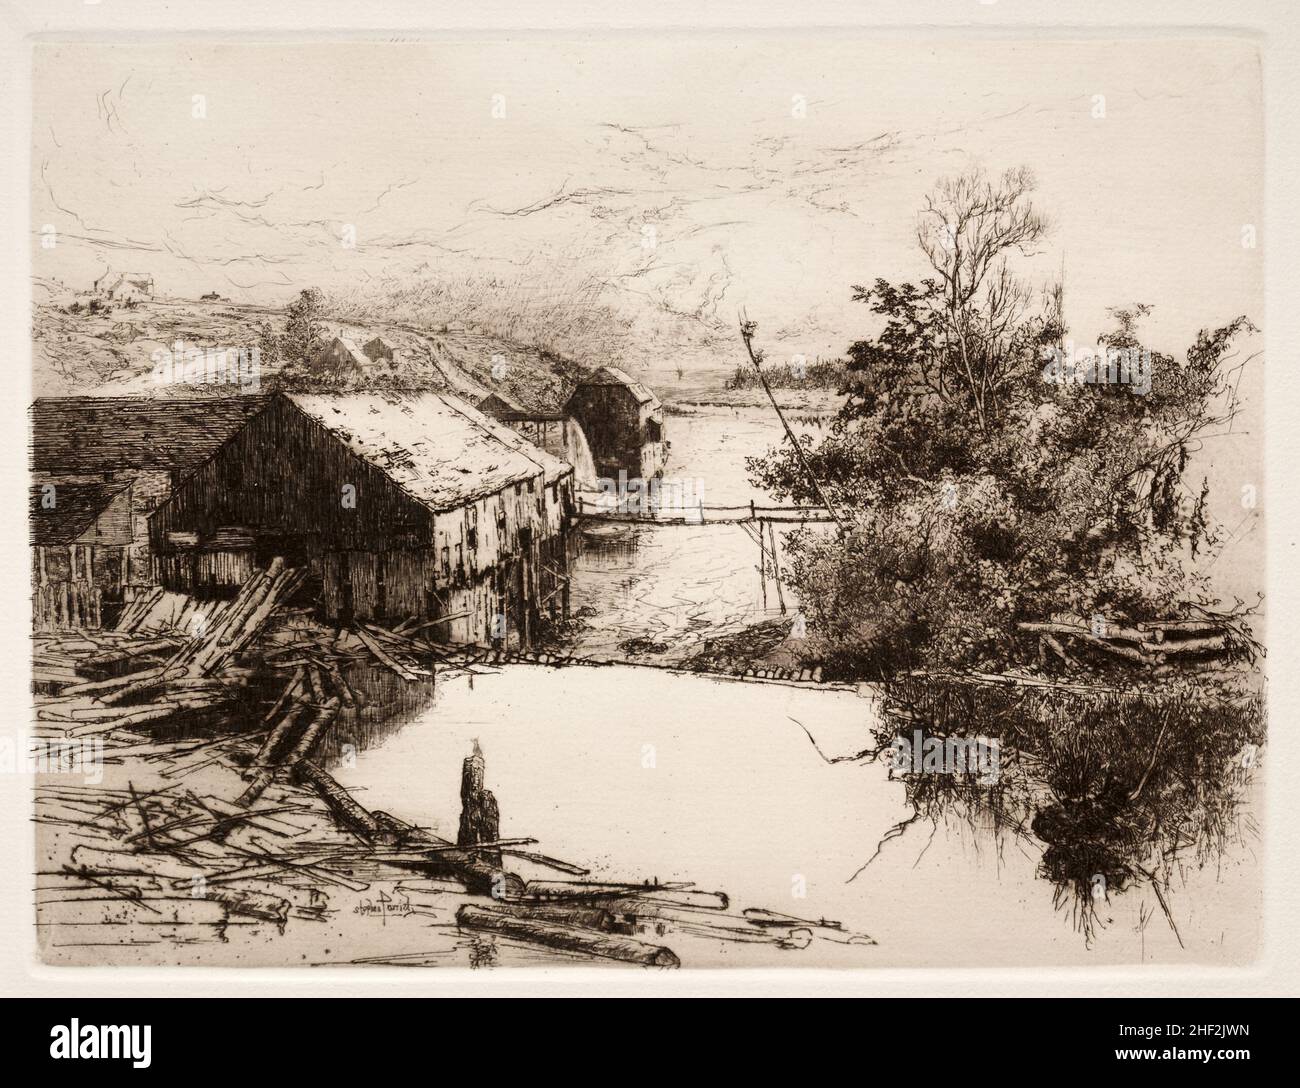 B 1884 fotografías e imágenes de alta resolución - Alamy